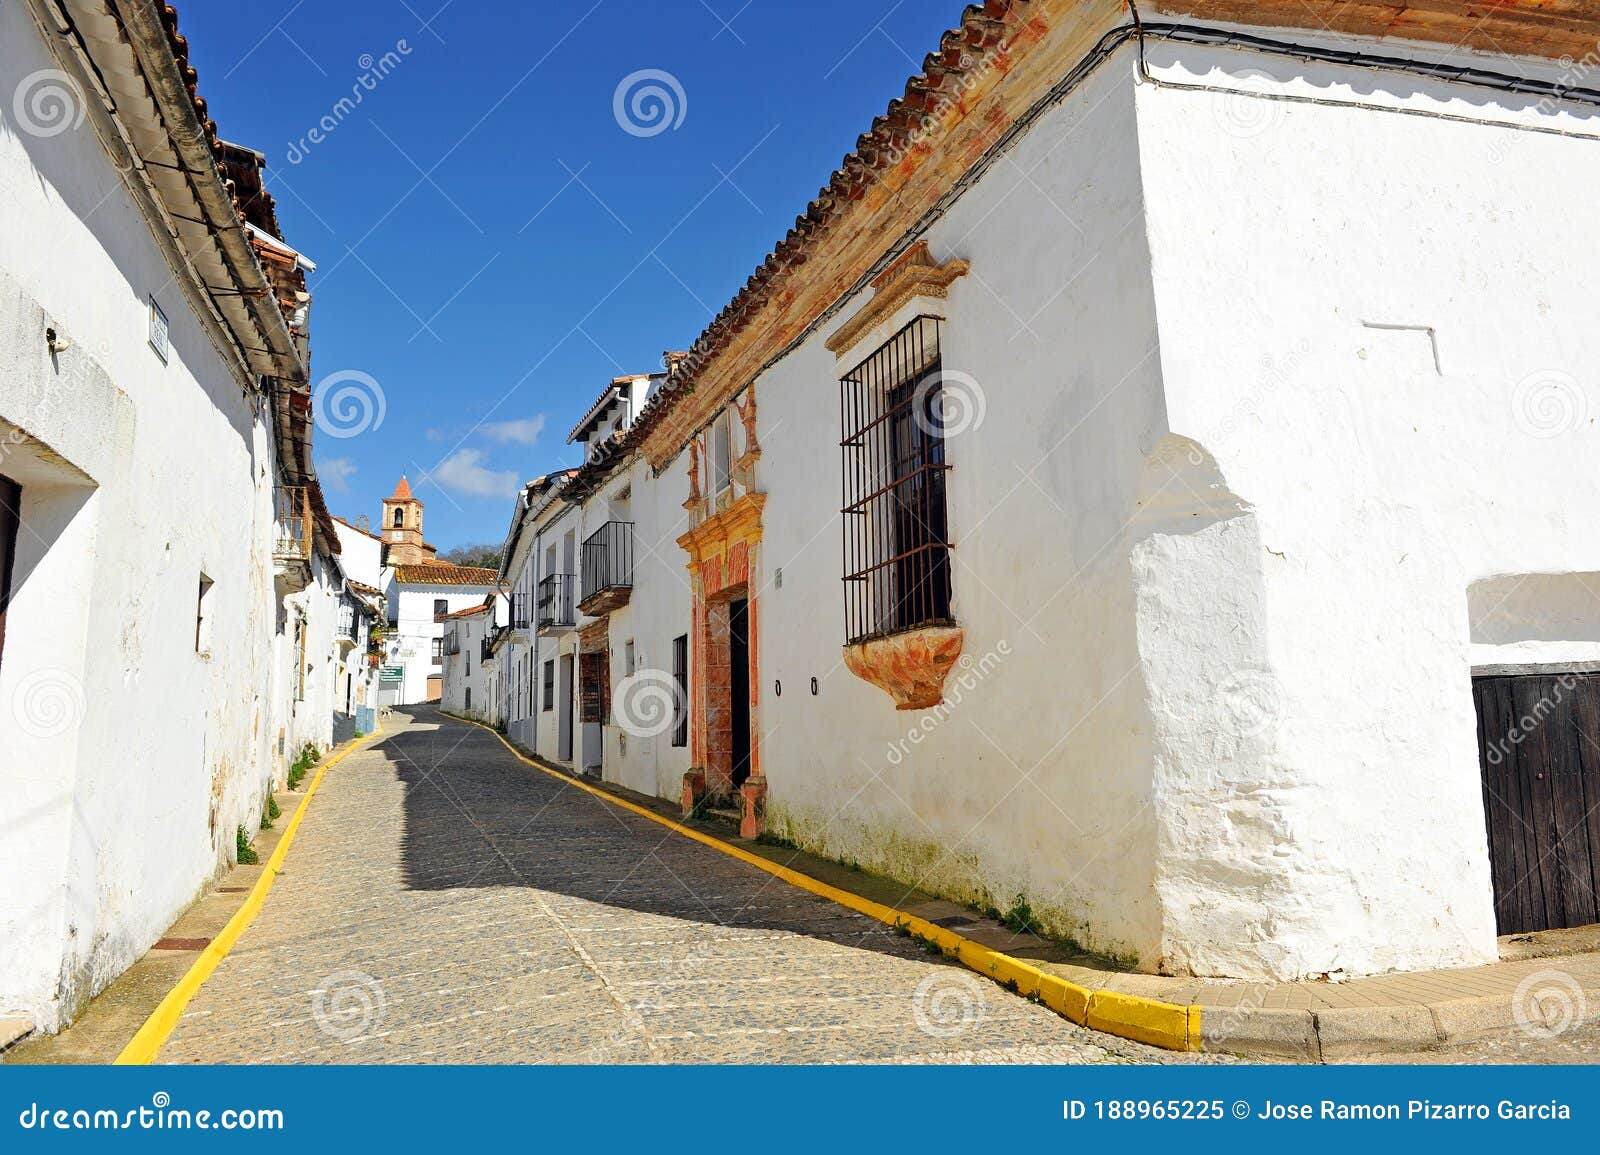 street in castano del robledo, province of huelva, spain